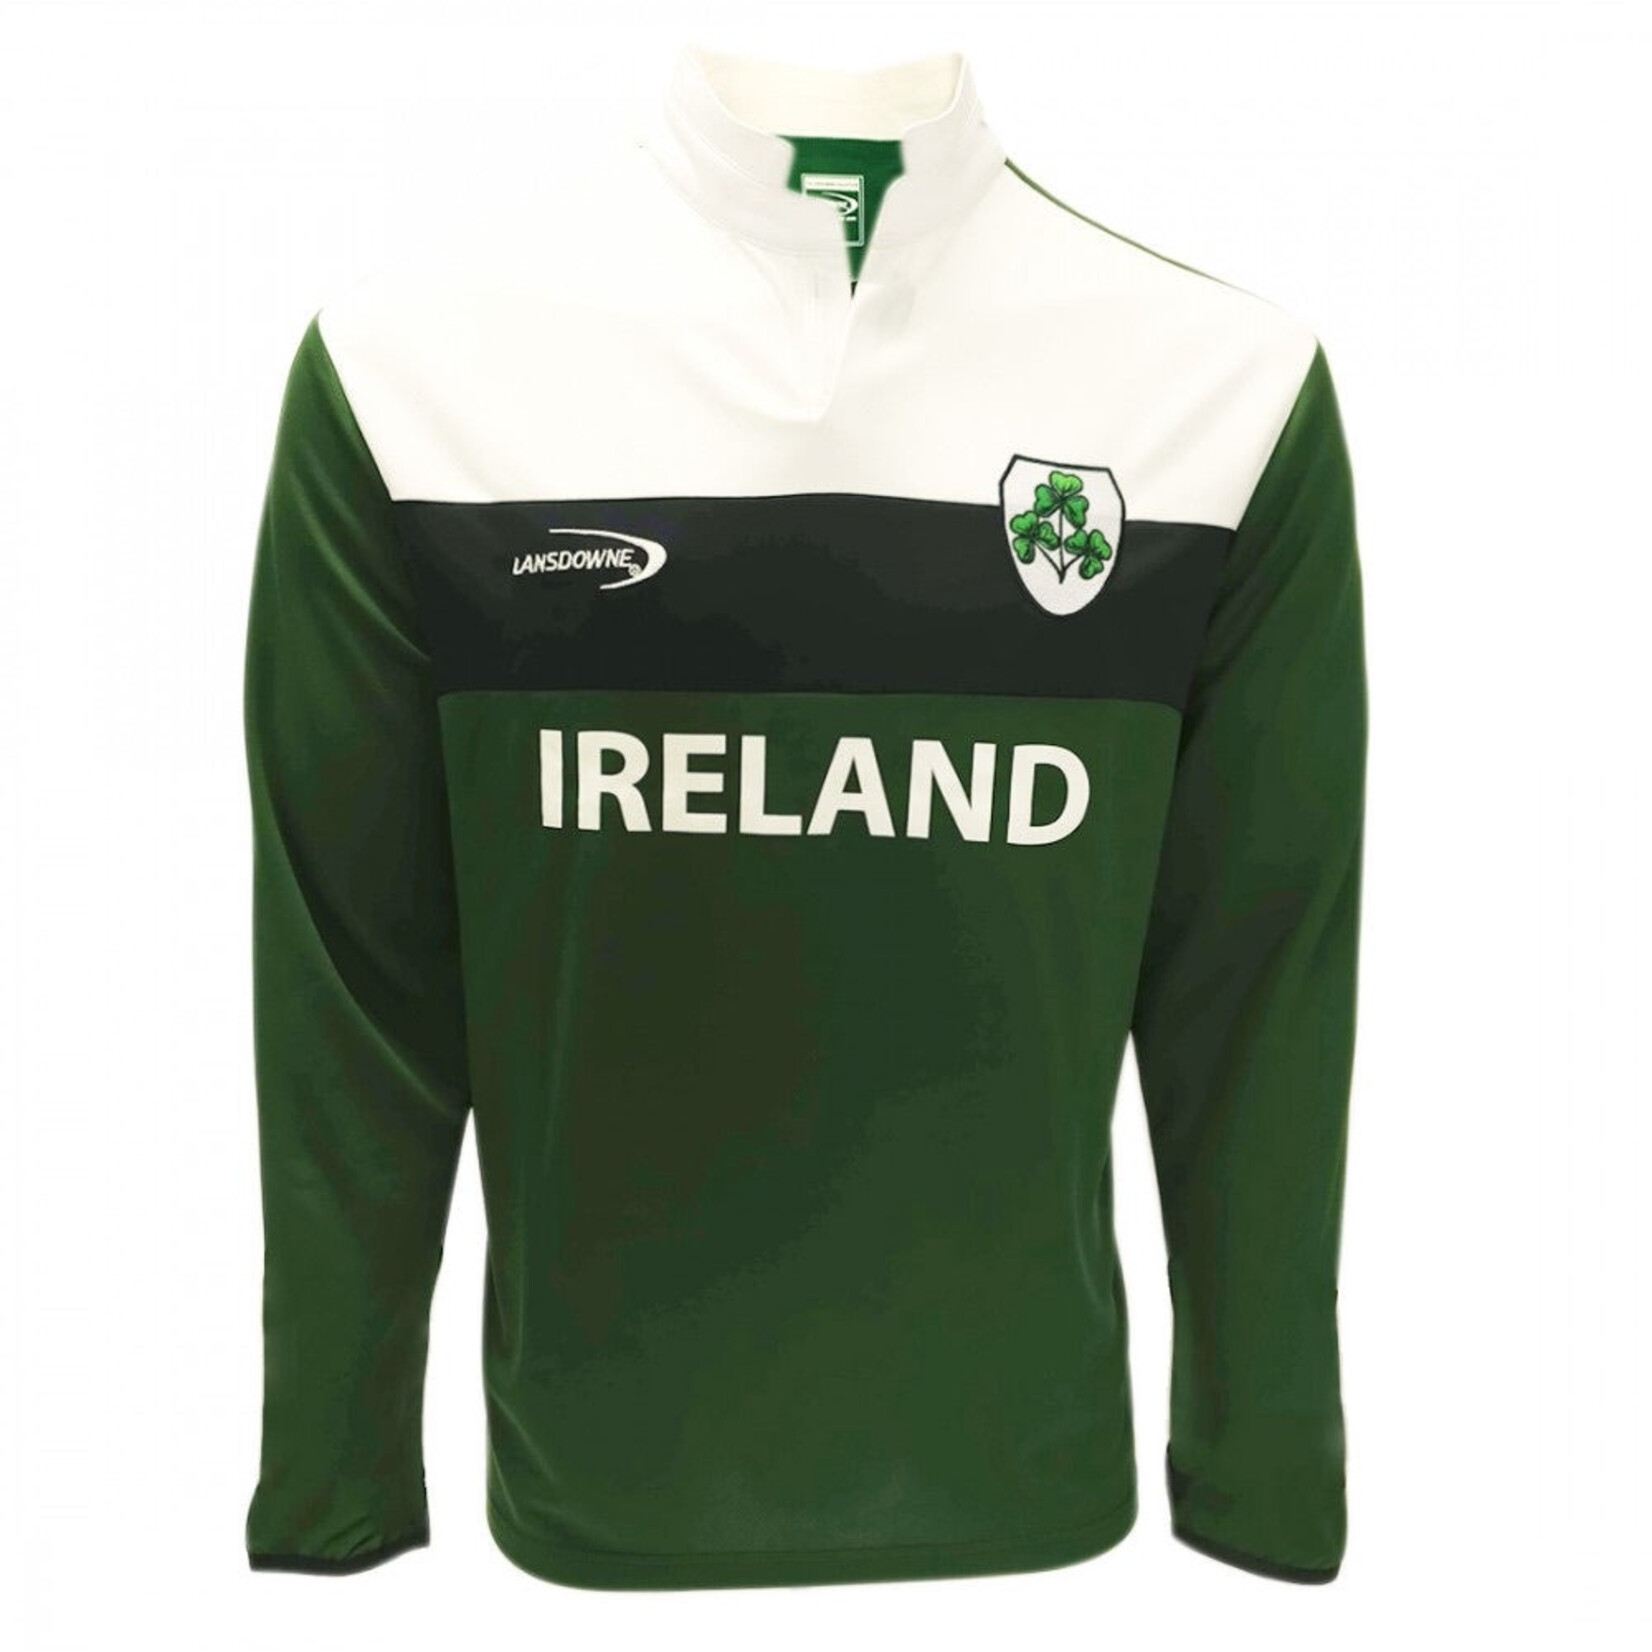 Lansdowne Kids Longsleeve "Ireland" Rugby Shirt